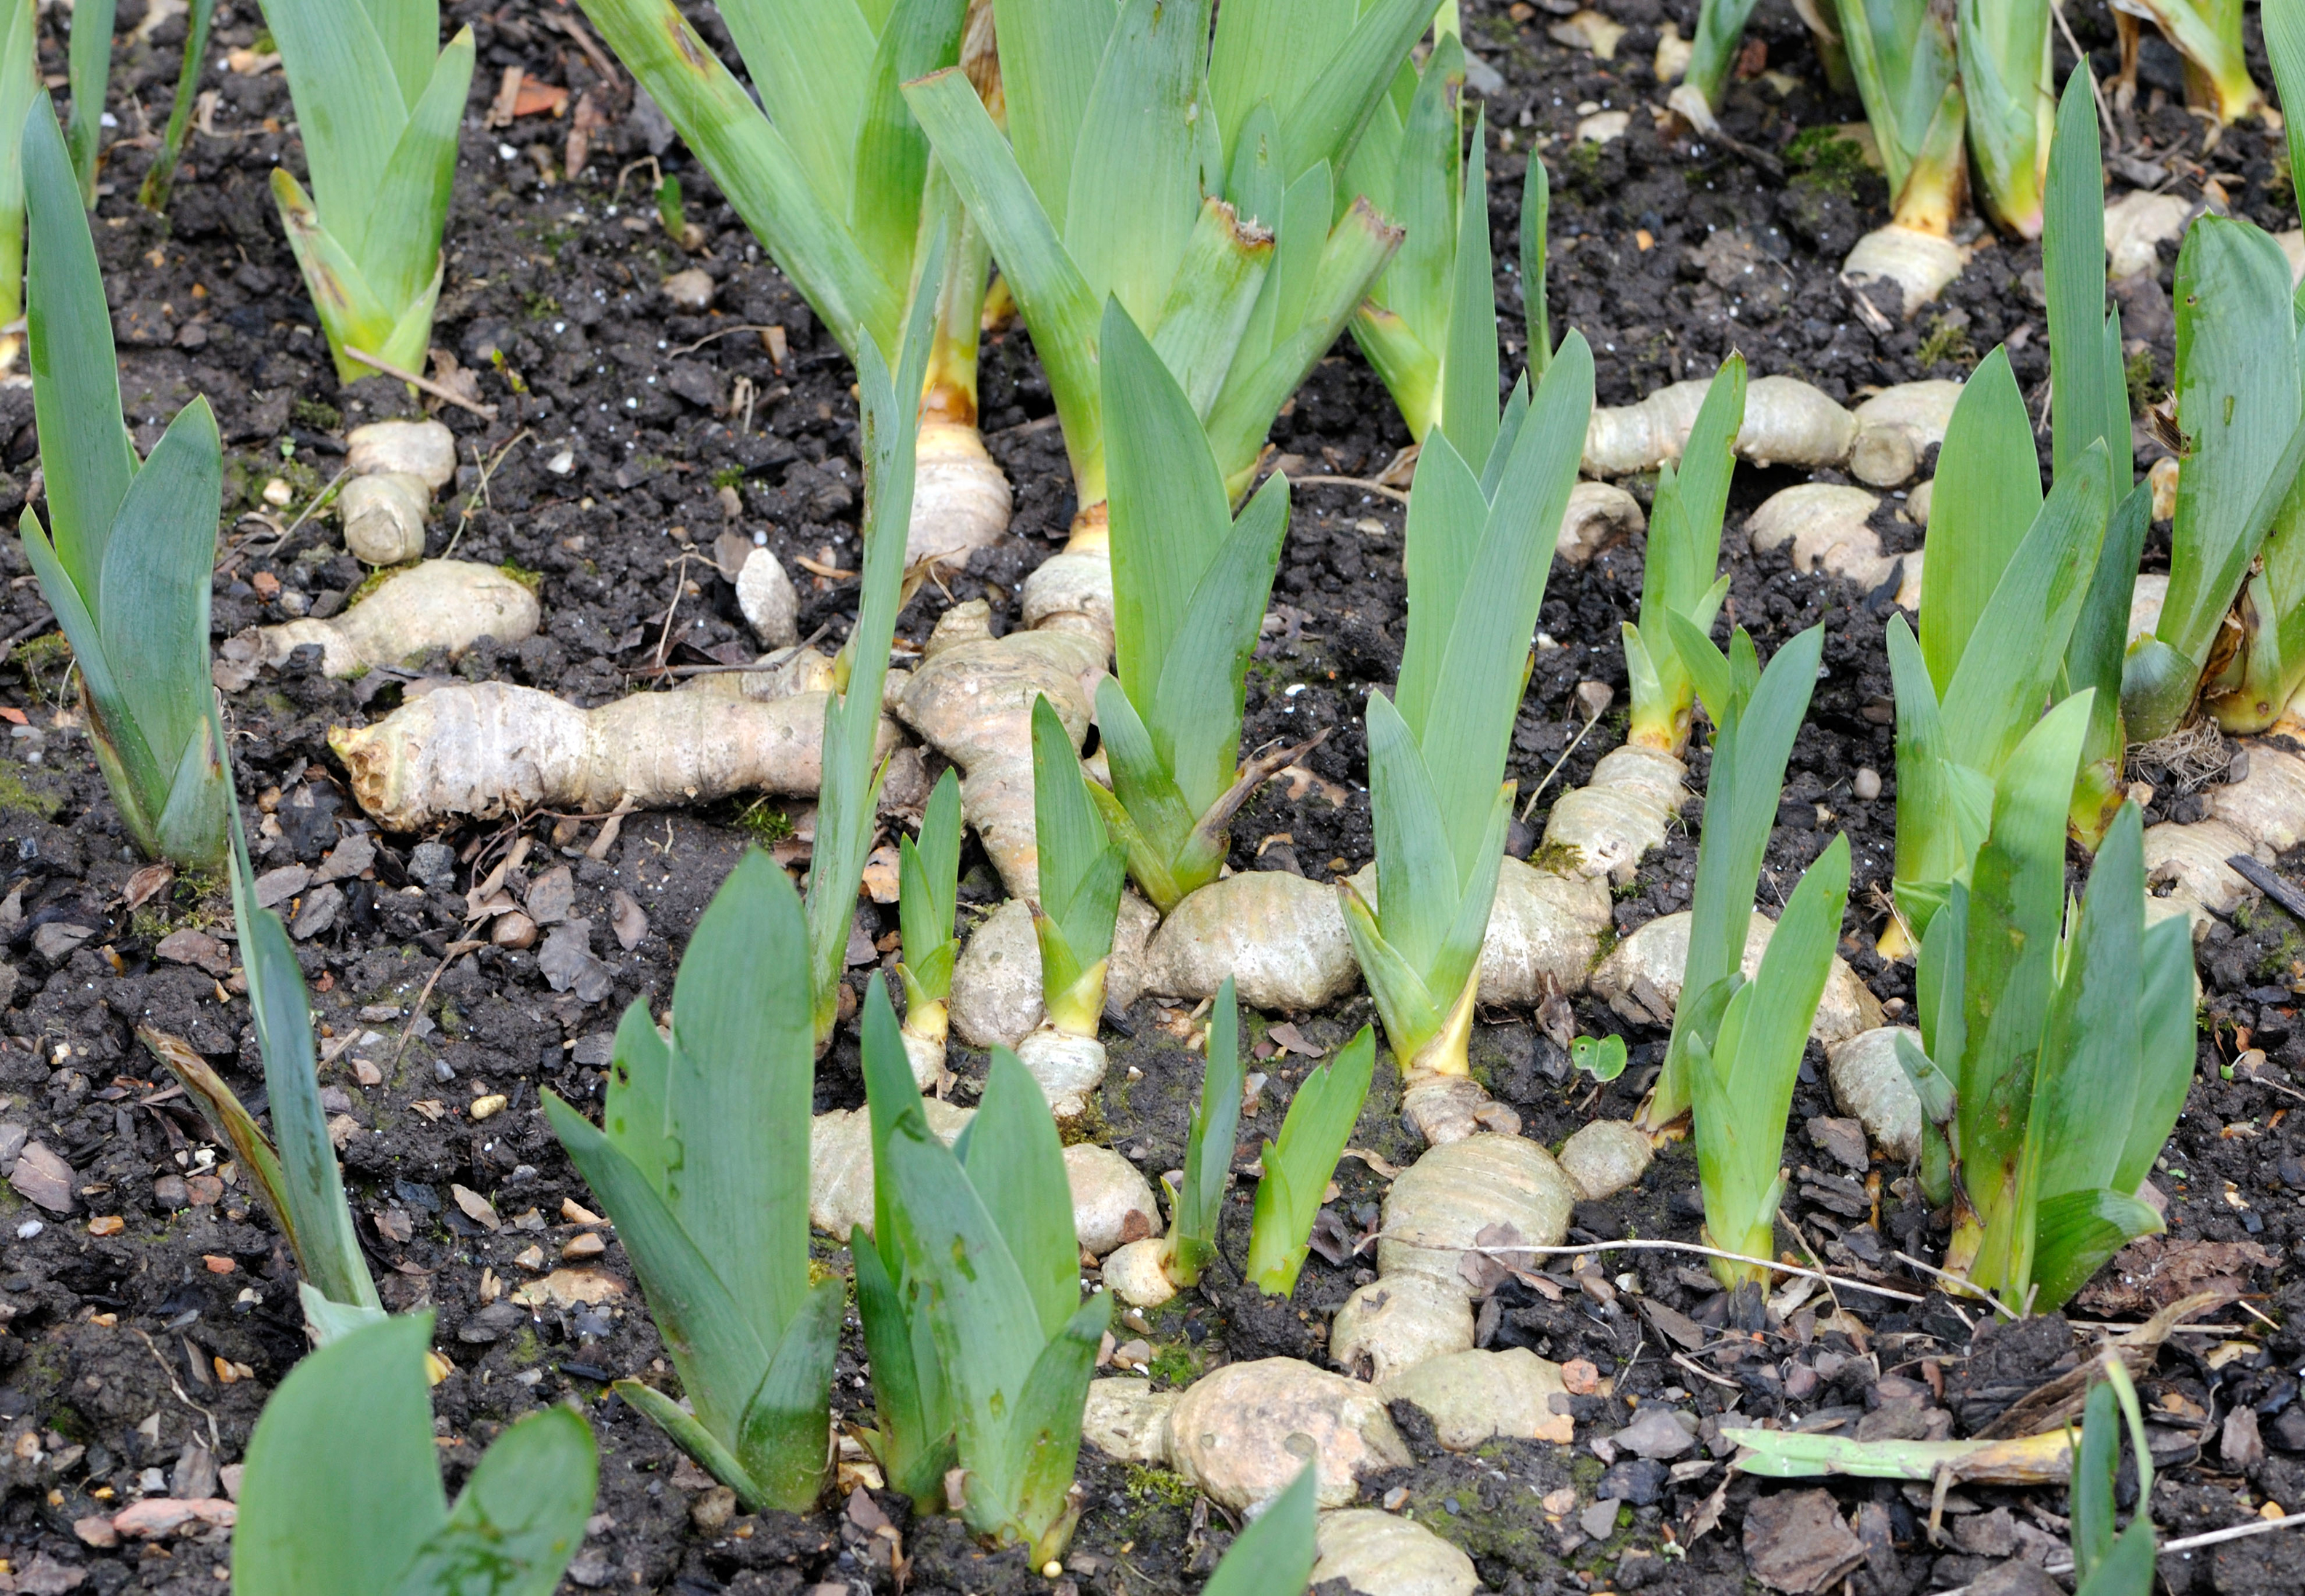 Iris rhizomes on the soil surface (Alamy/PA)